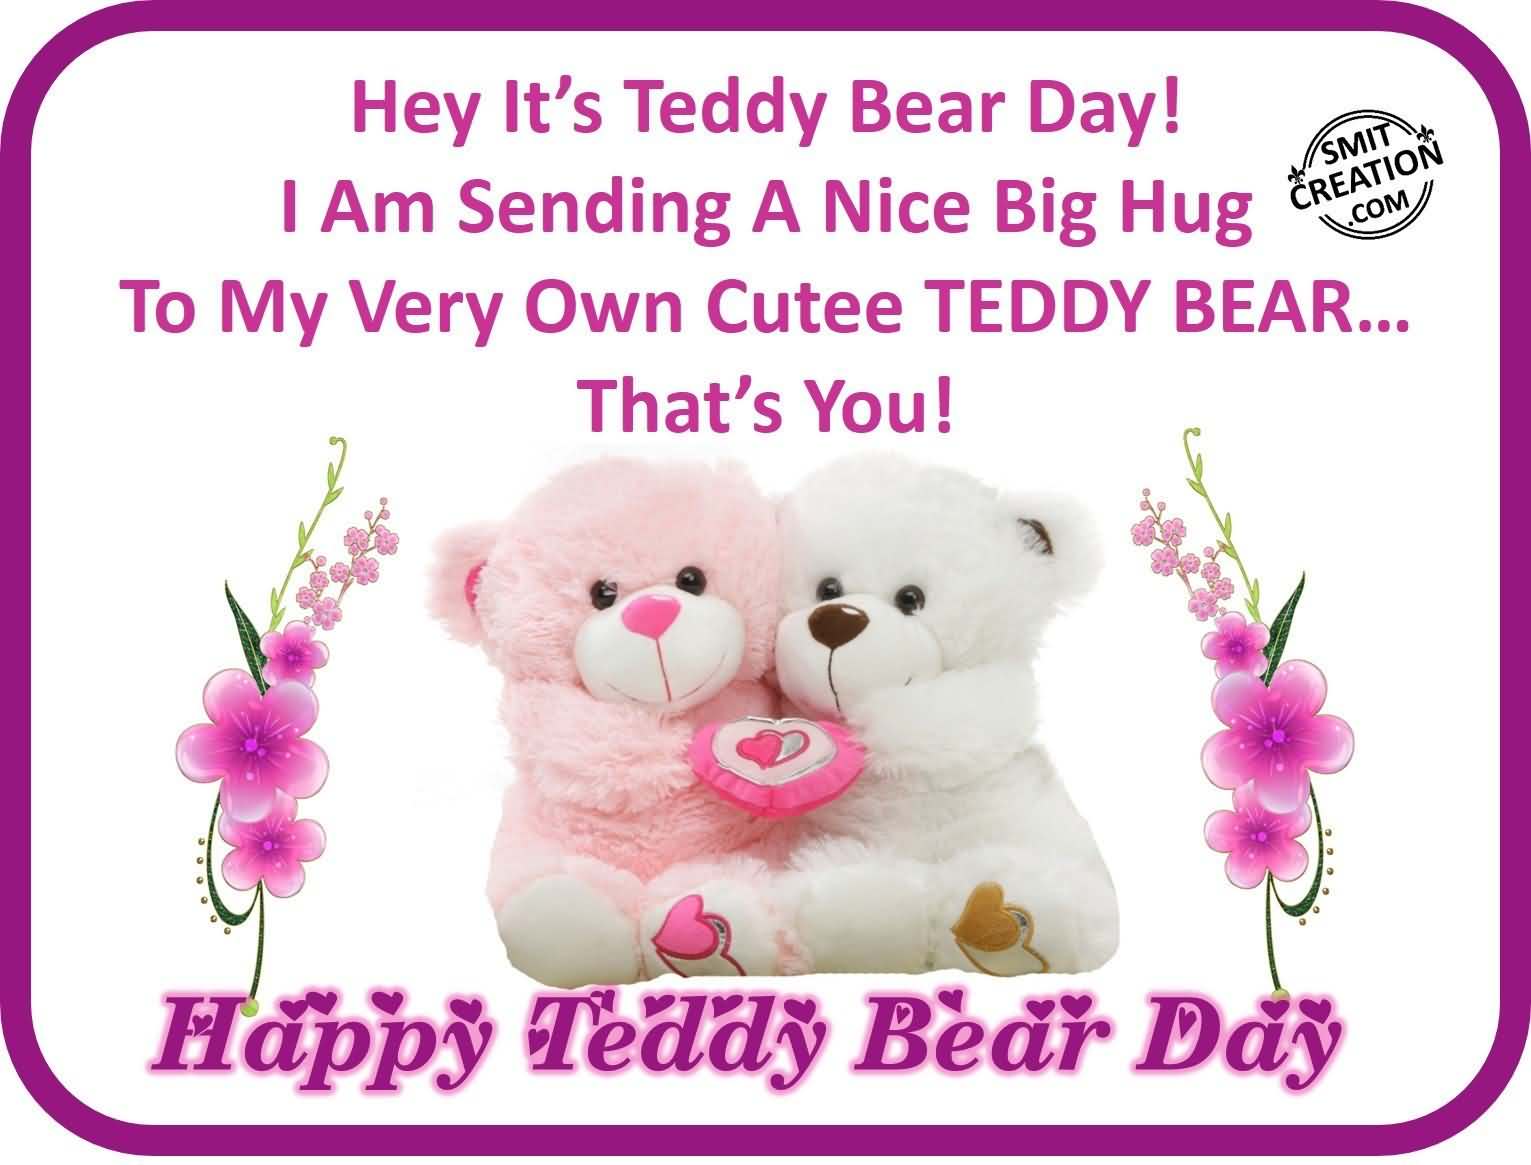 Hey it's teddy bear day i am sending a nice big hug to my very own cute teddy bear that's you